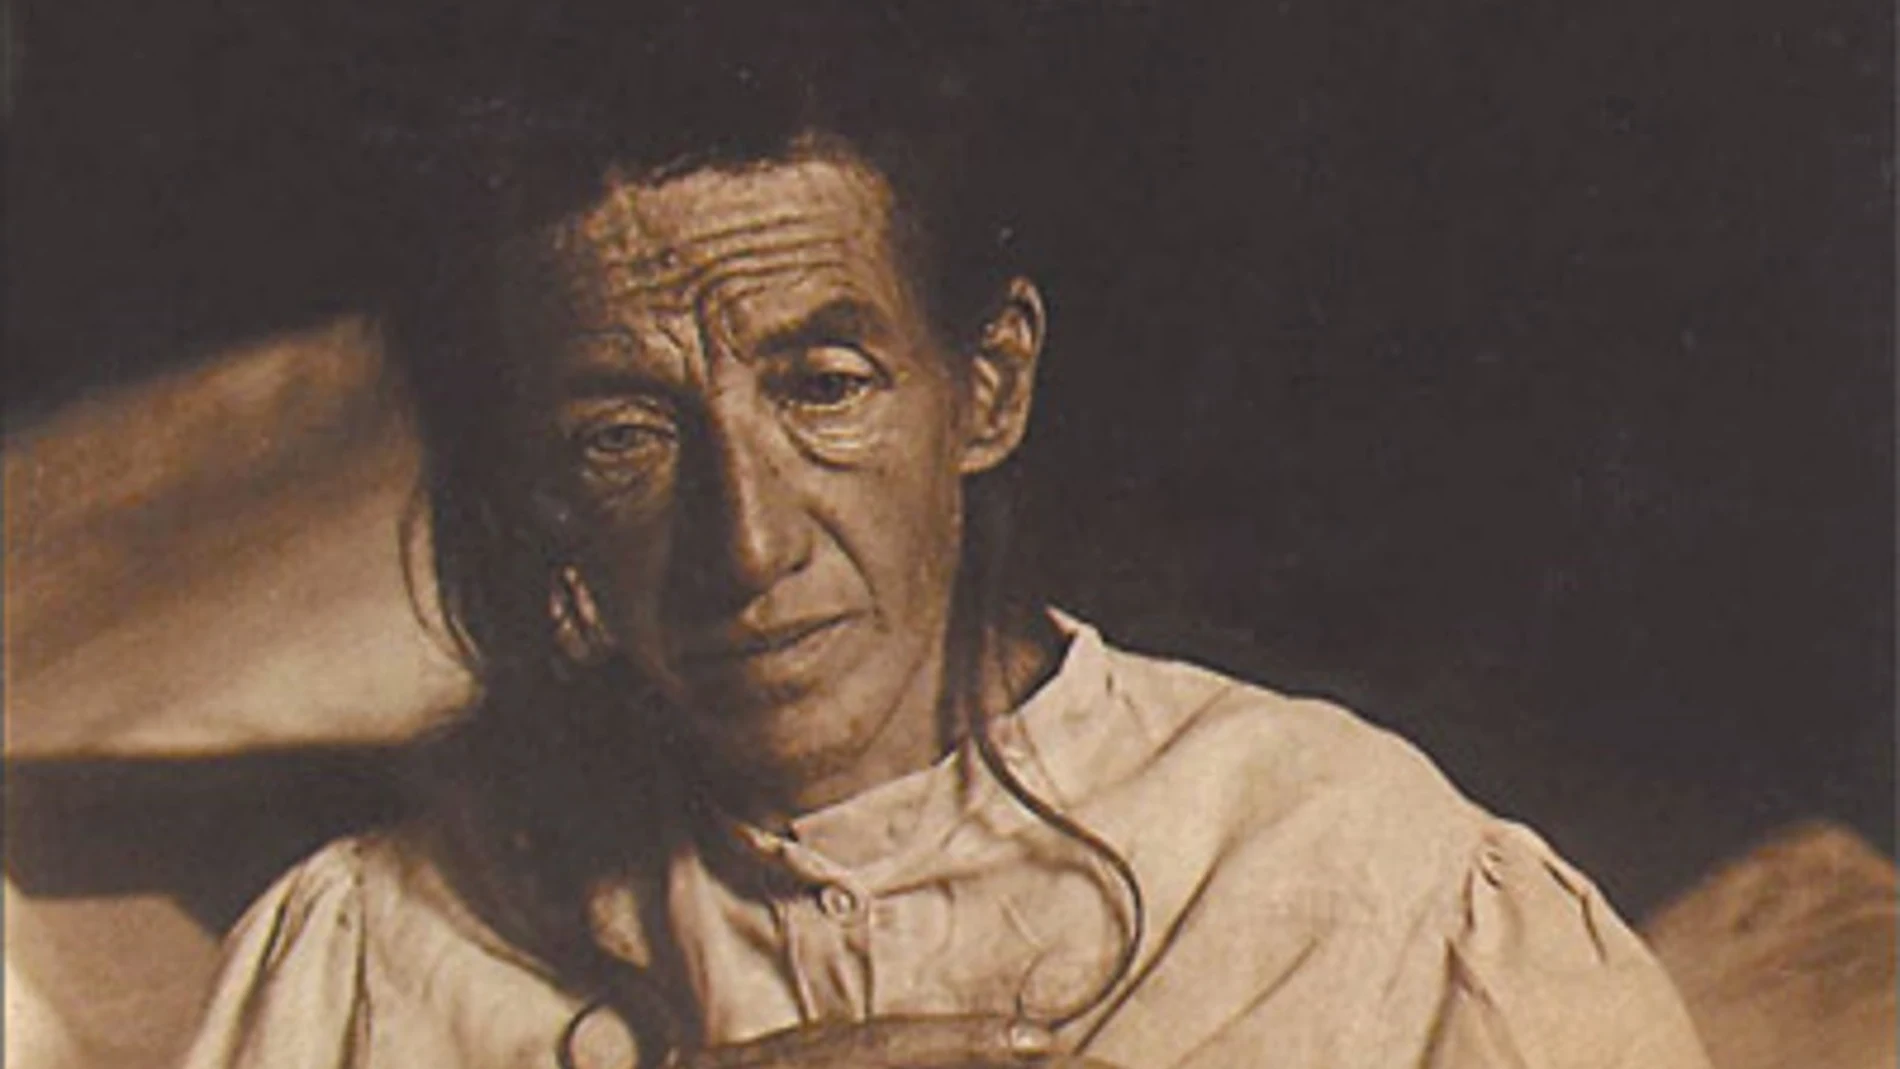 Auguste Deter, la primera paciente diagnosticada de Alzheimer